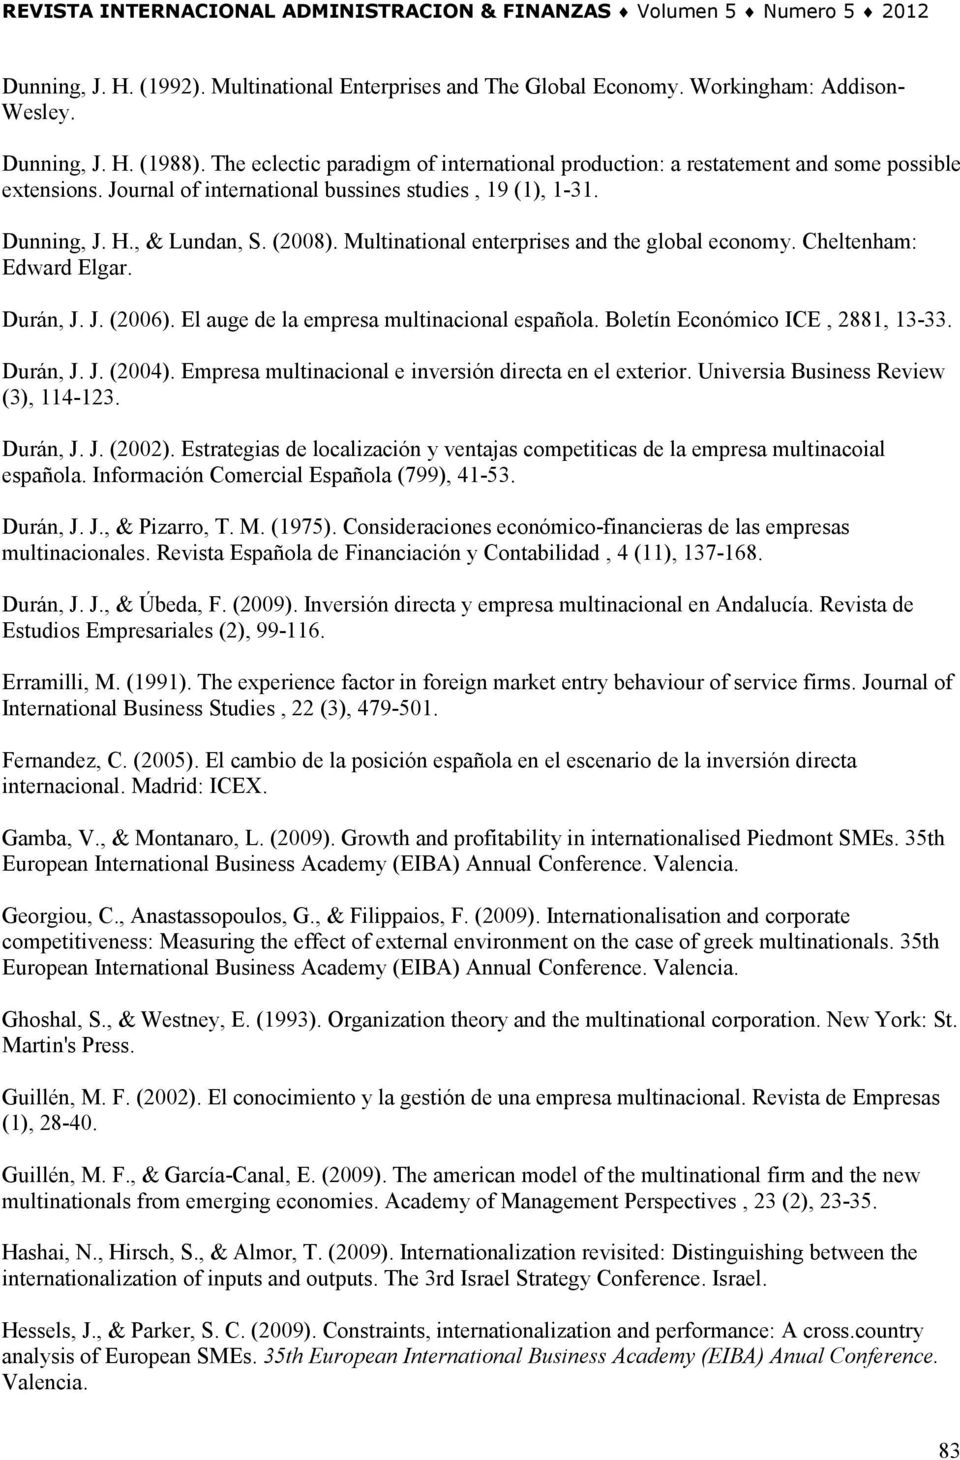 Multinational enterprises and the global economy. Cheltenham: Edward Elgar. Durán, J. J. (2006). El auge de la empresa multinacional española. Boletín Económico ICE, 2881, 13-33. Durán, J. J. (2004).